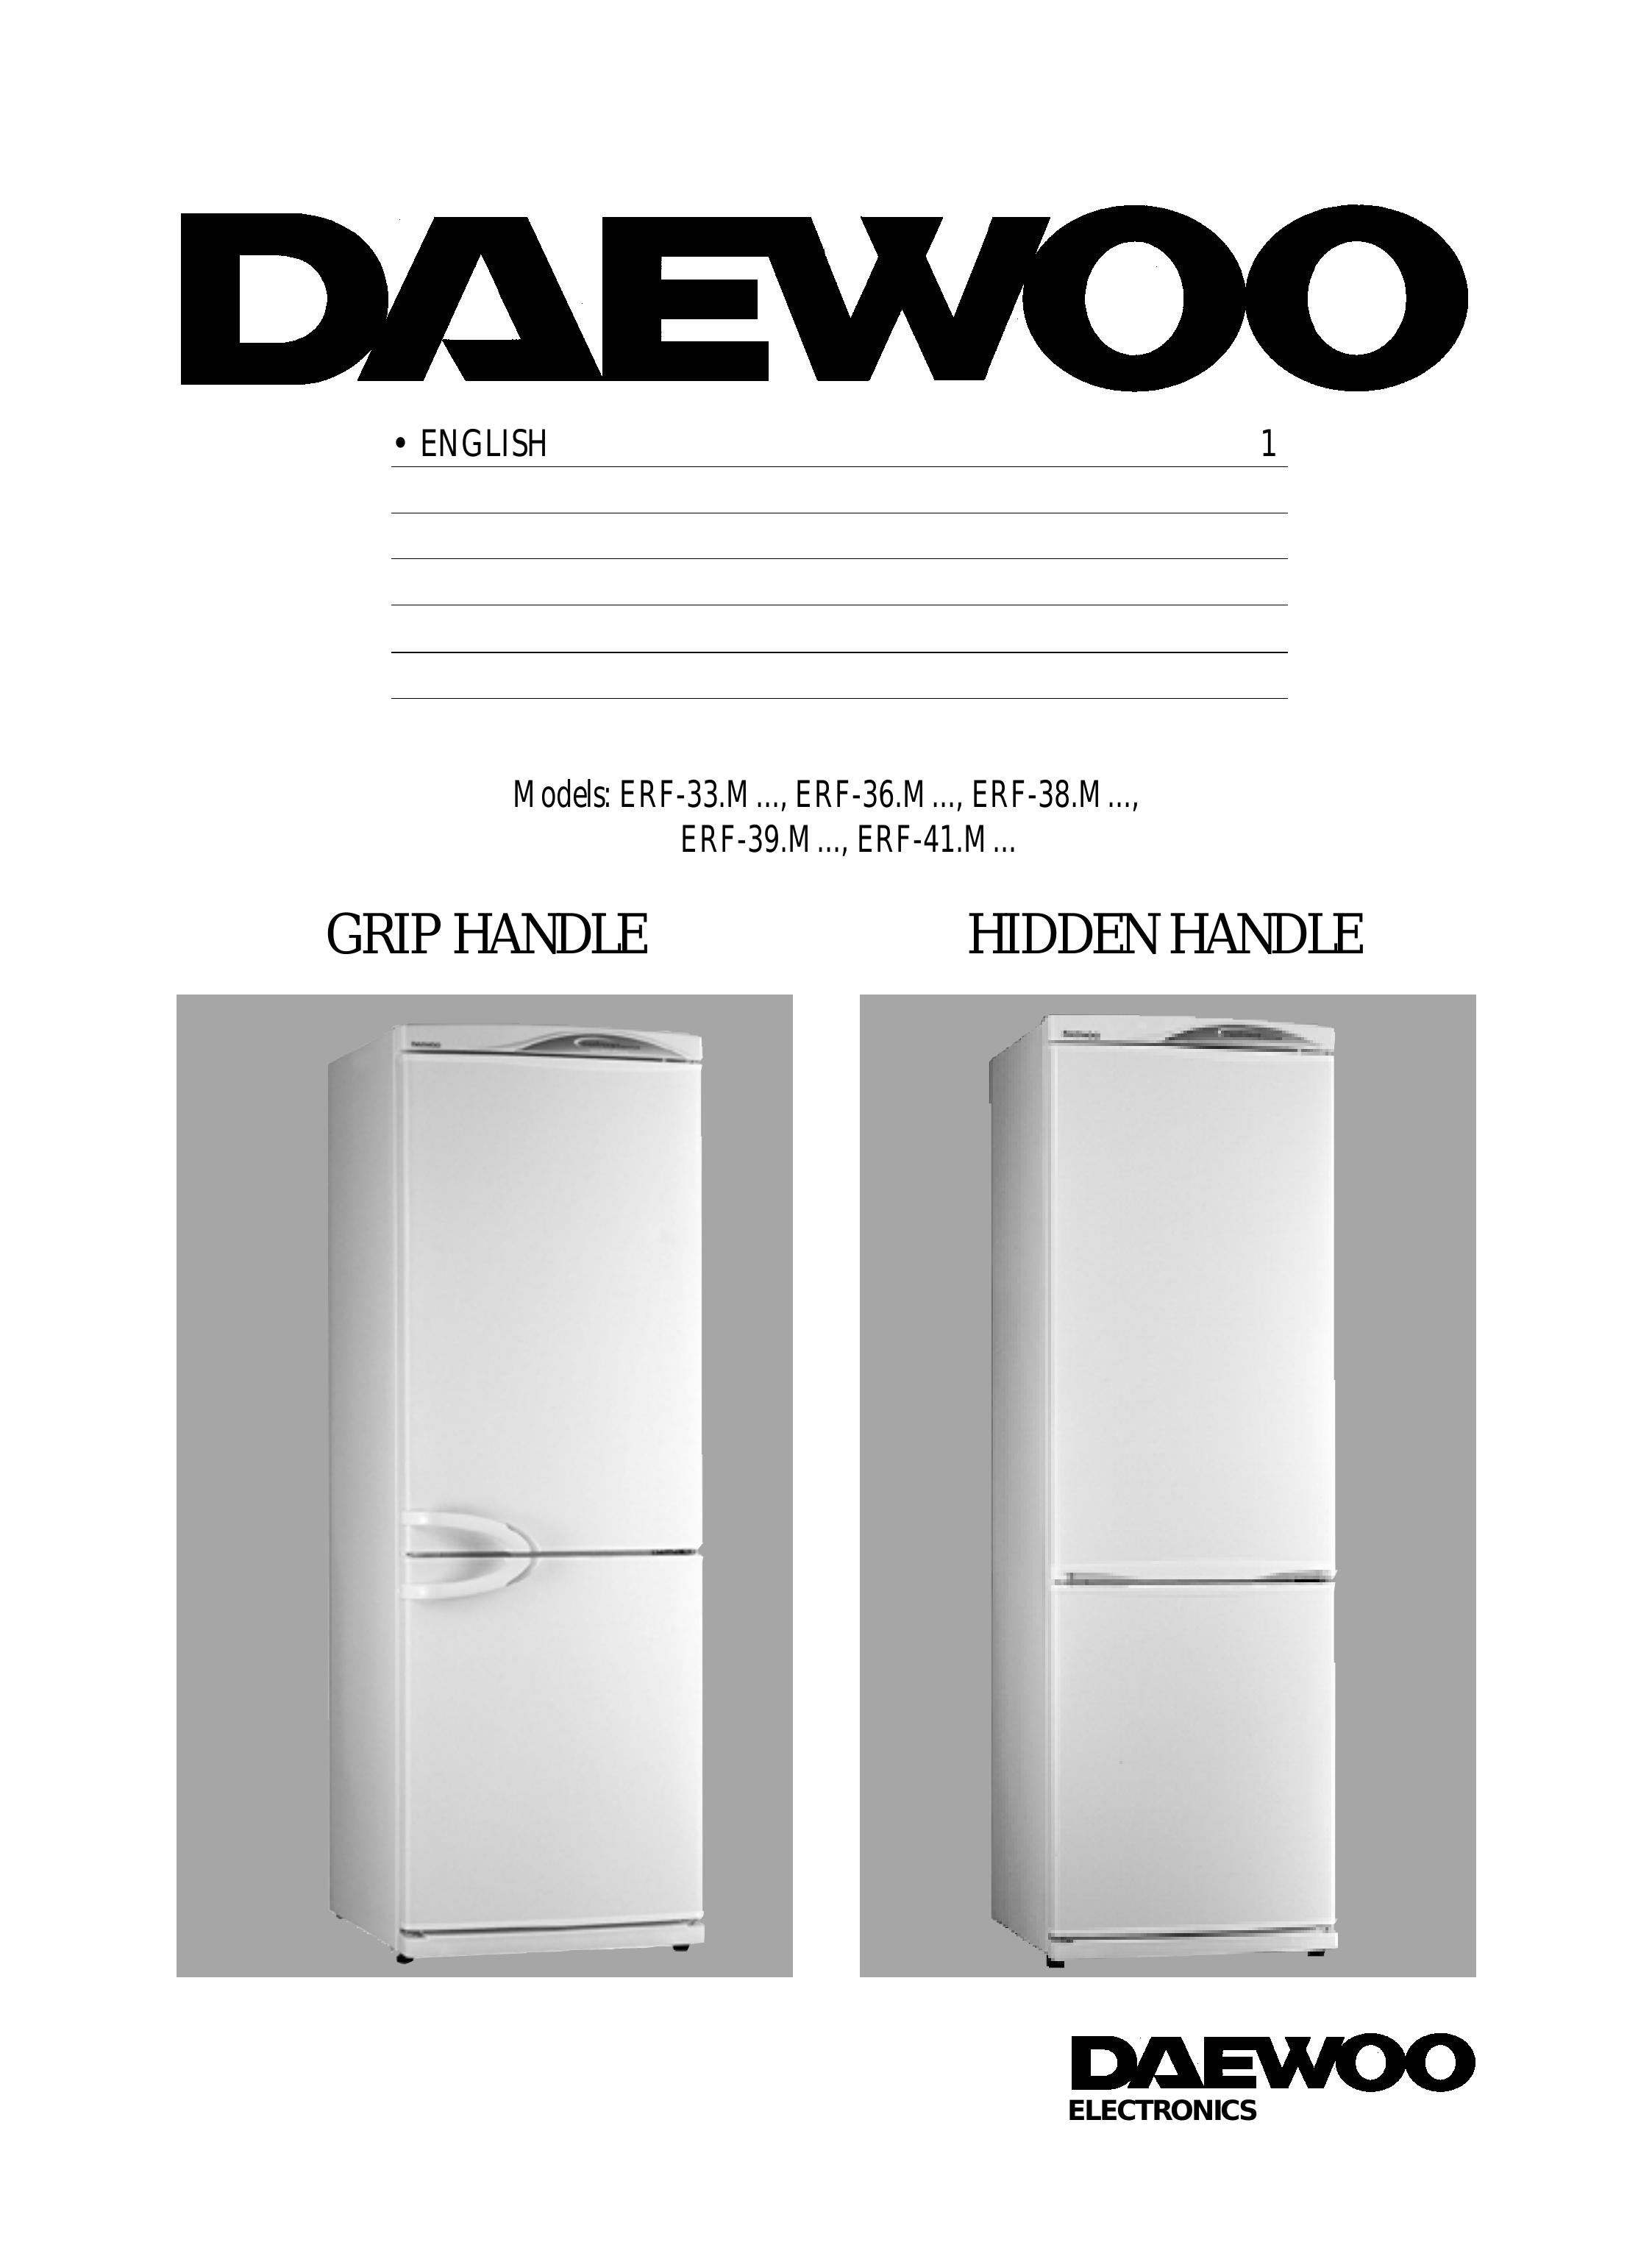 Daewoo ERF-33.M Refrigerator User Manual